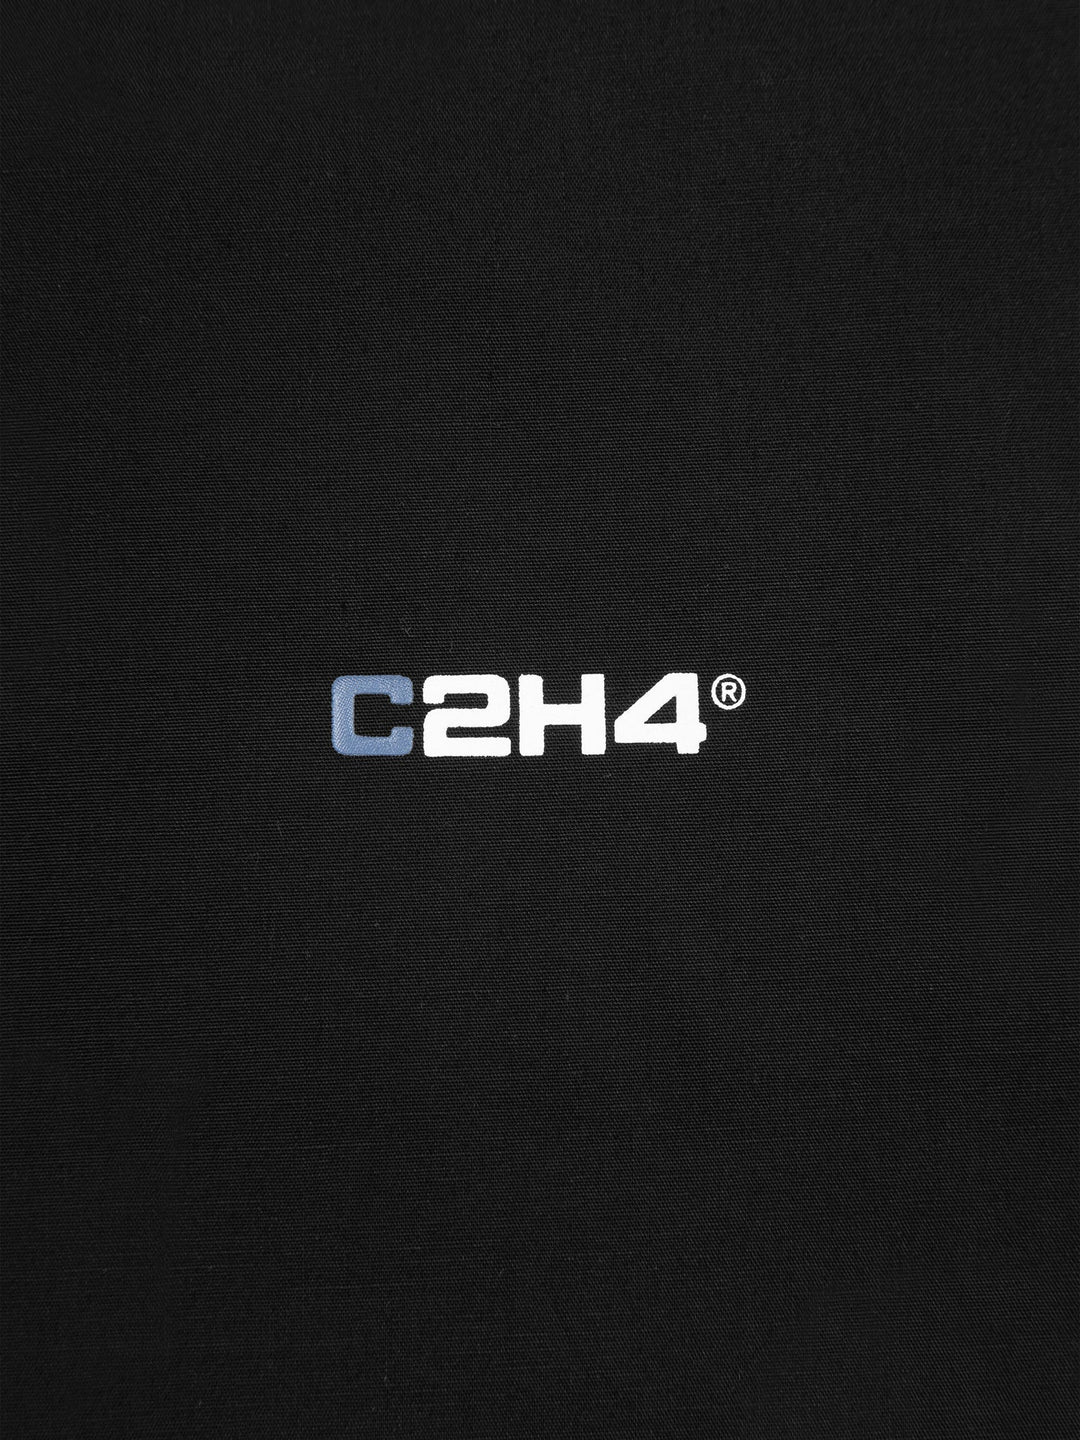 C2H4 Staff Uniform Logo Shirt